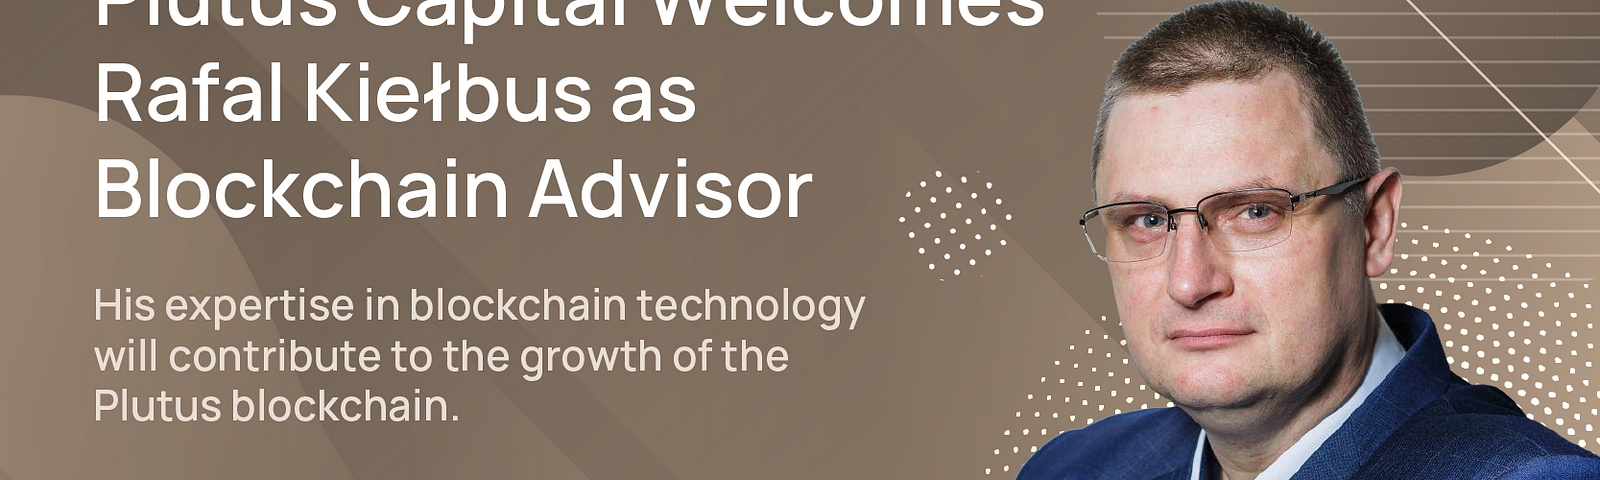 Plutus Capital Welcomes Rafal Kiełbus as Blockchain Advisor